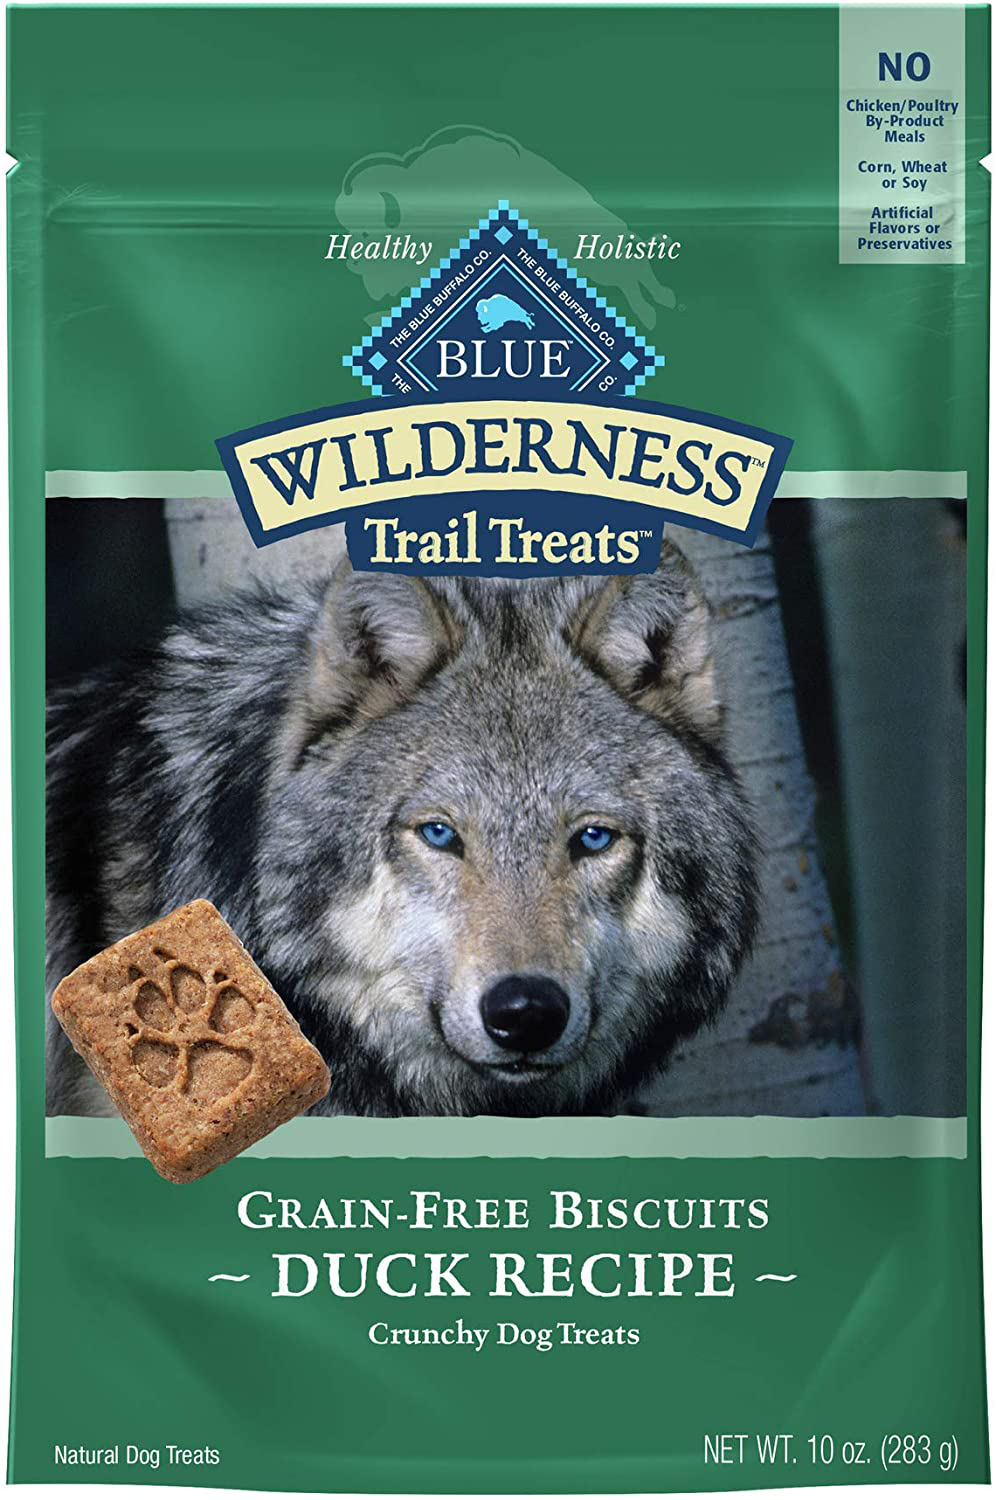 Blue Buffalo Wilderness Trail Treats Grain Free Biscuits Crunchy Dog Treats